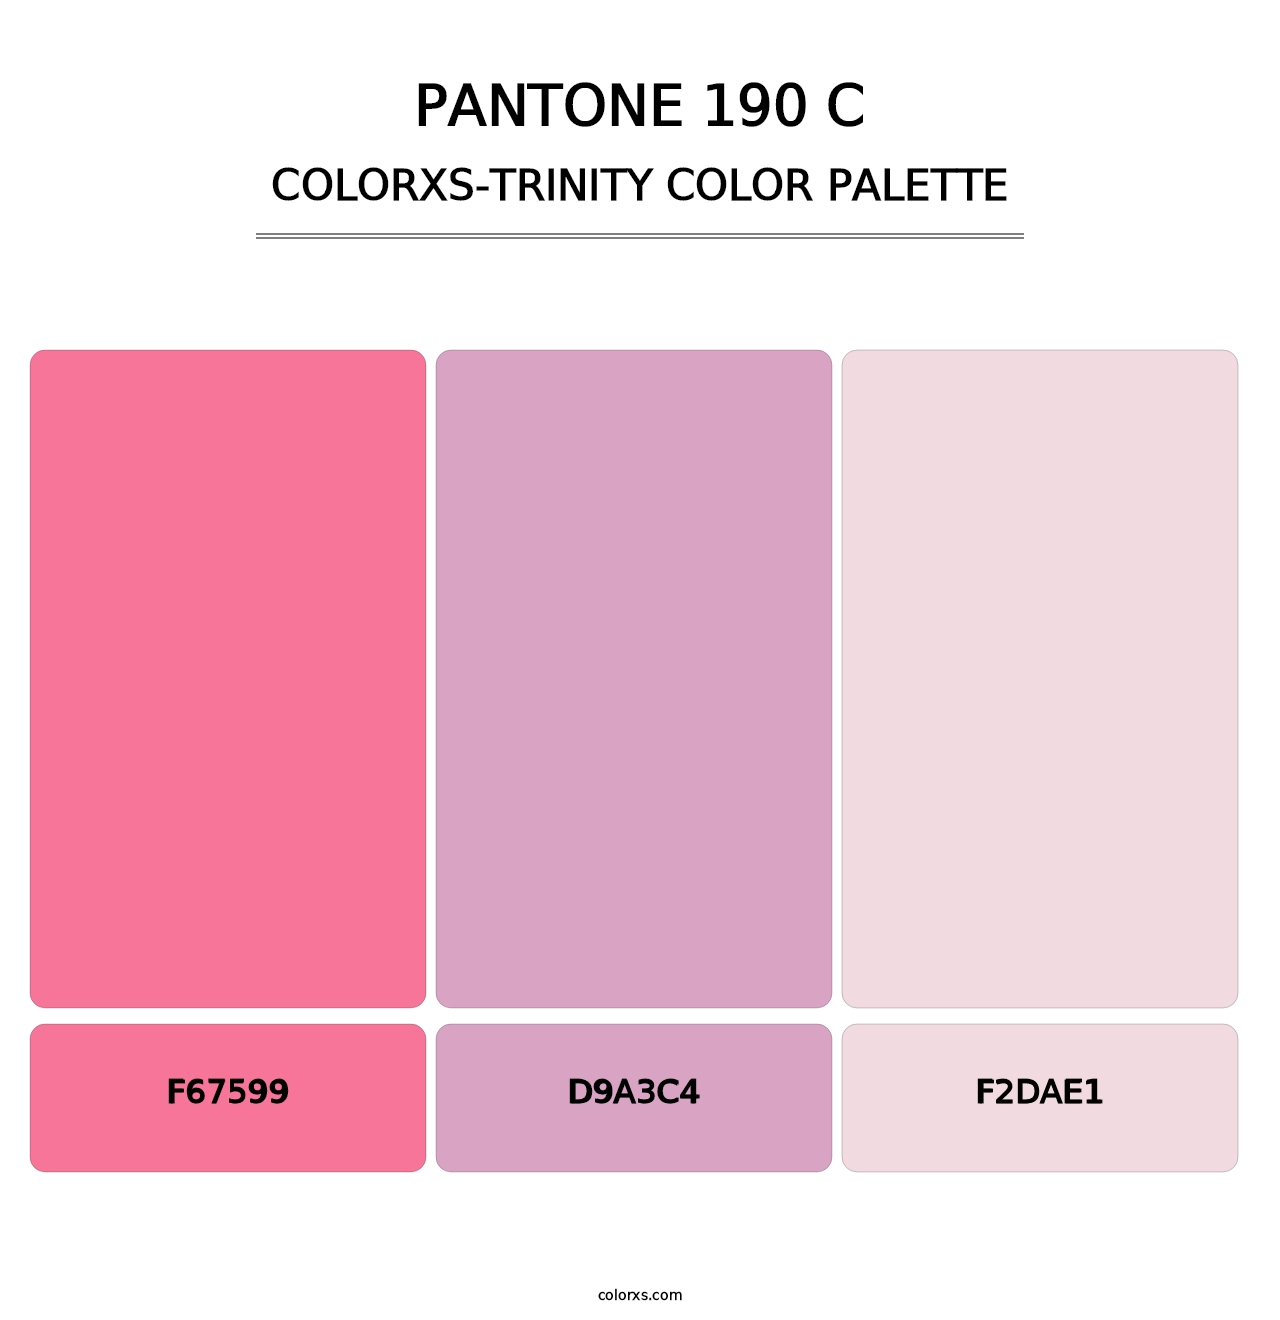 PANTONE 190 C - Colorxs Trinity Palette